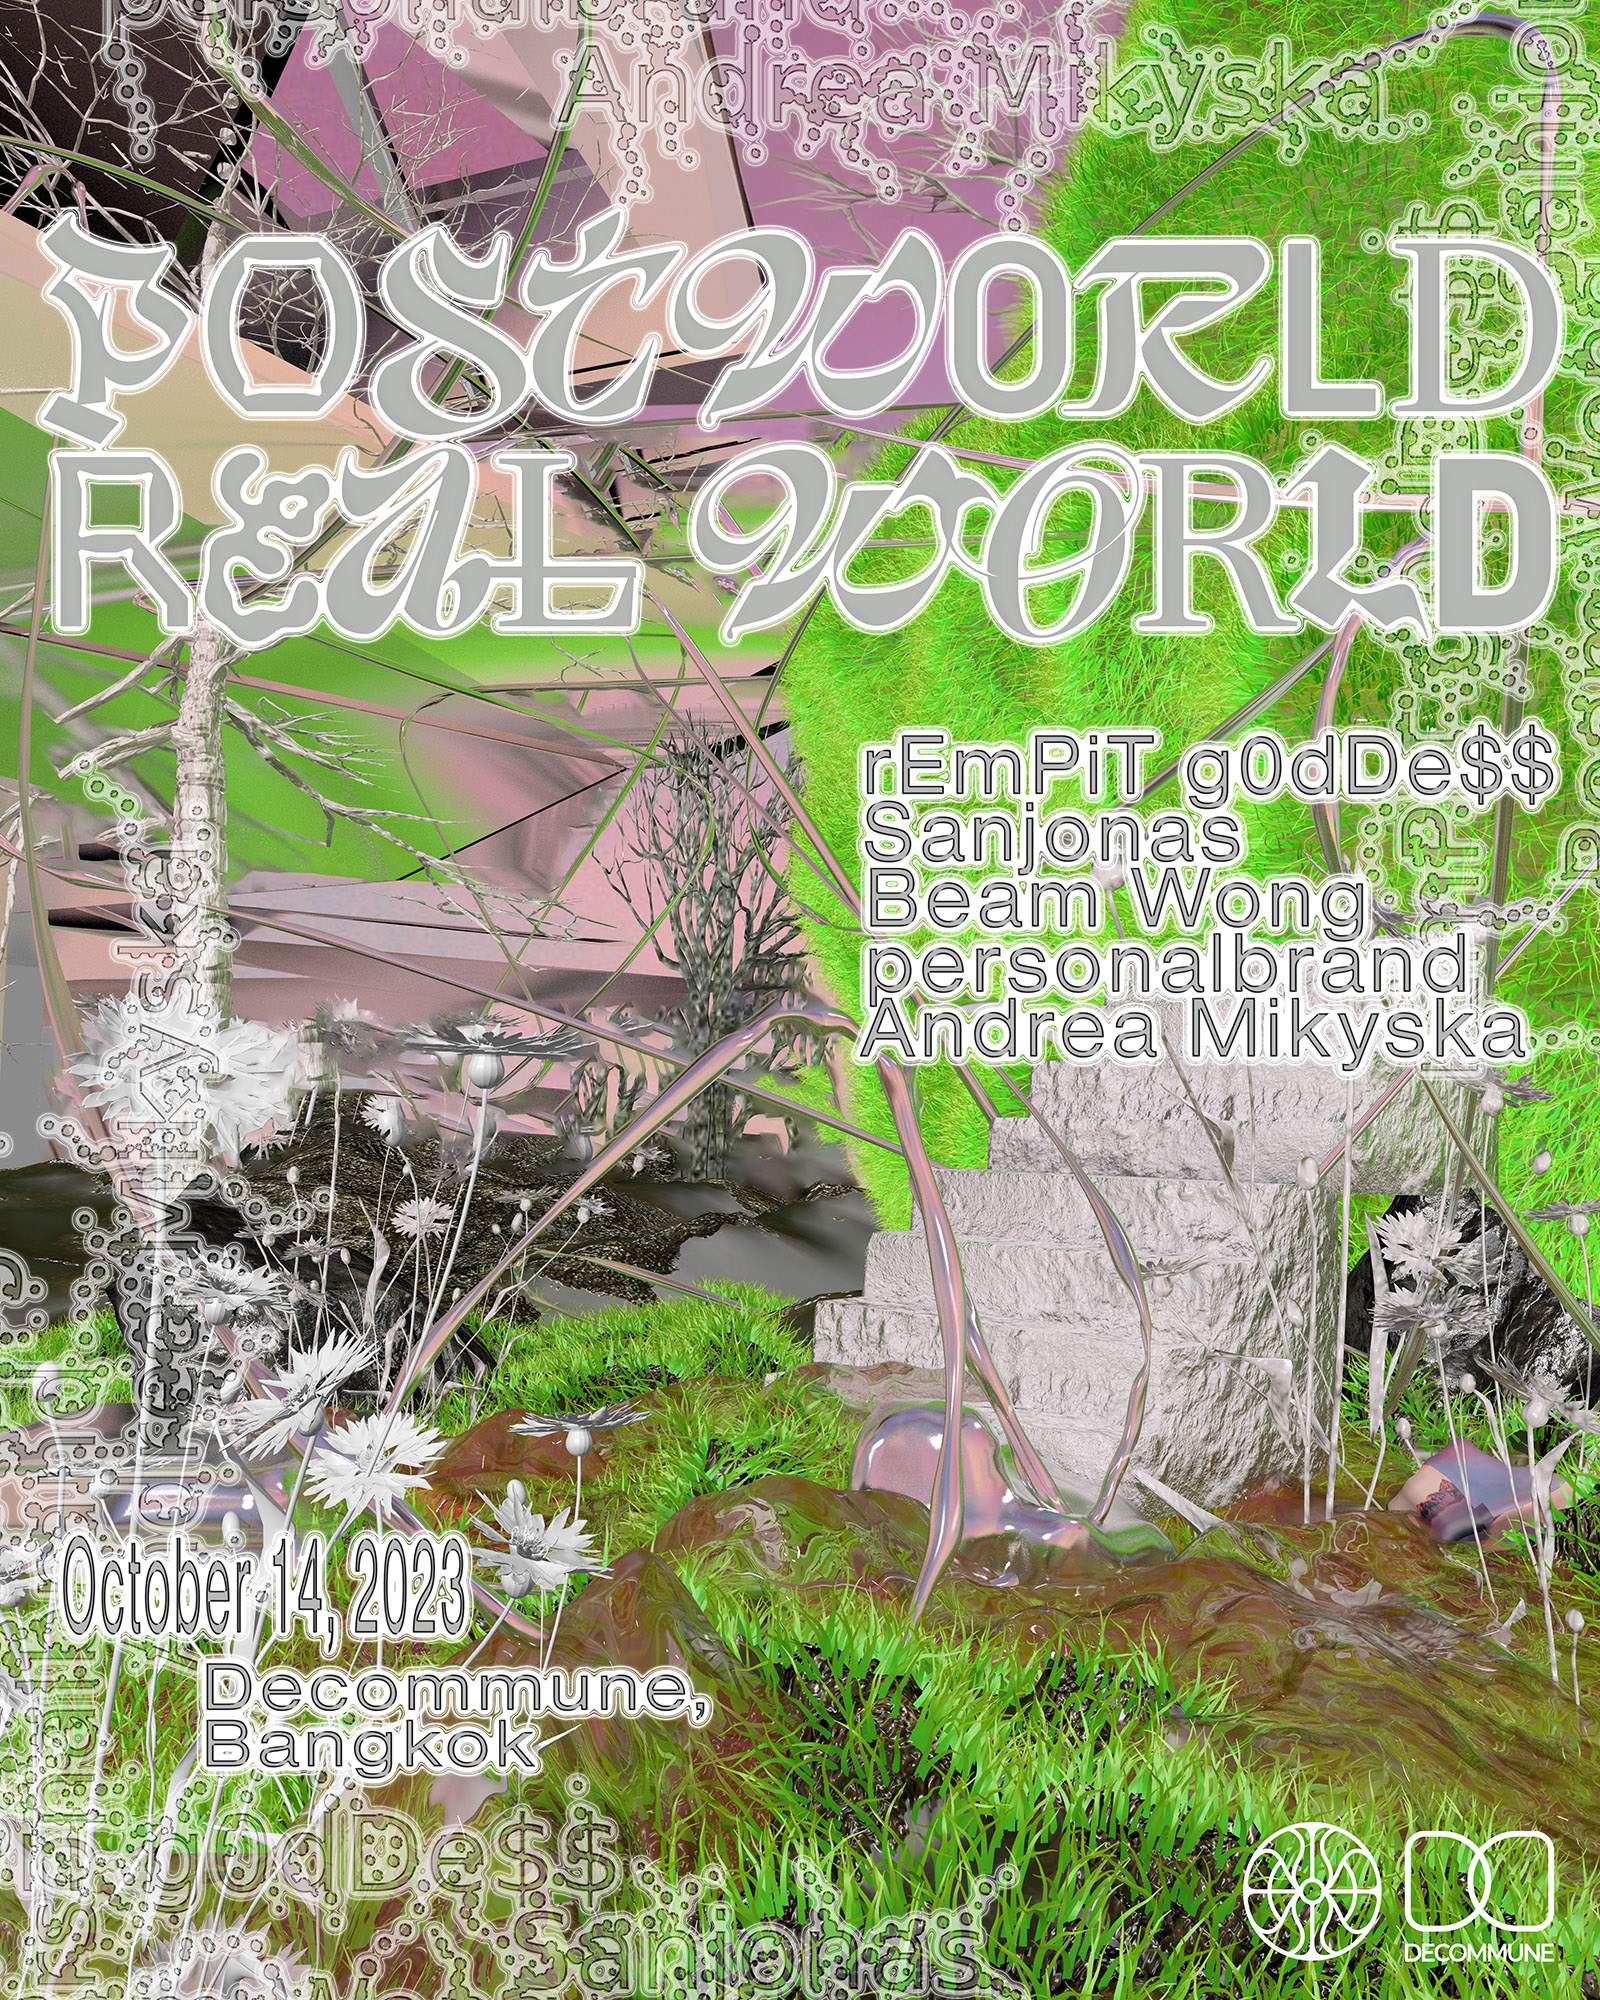 POSTWORLD Real World - Página frontal